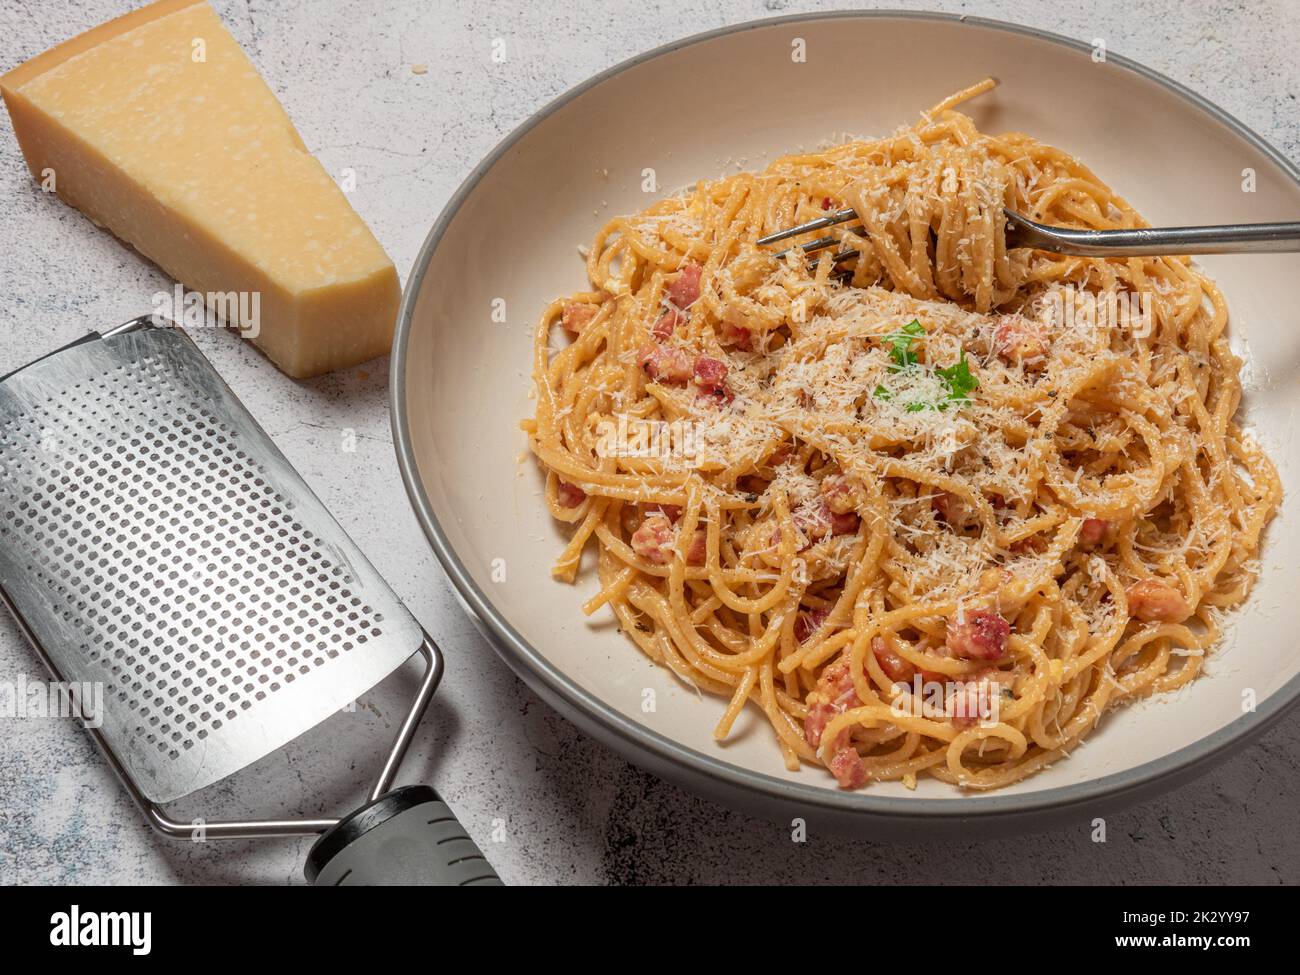 Spaghetti carbonara with parmesan grater Stock Photo